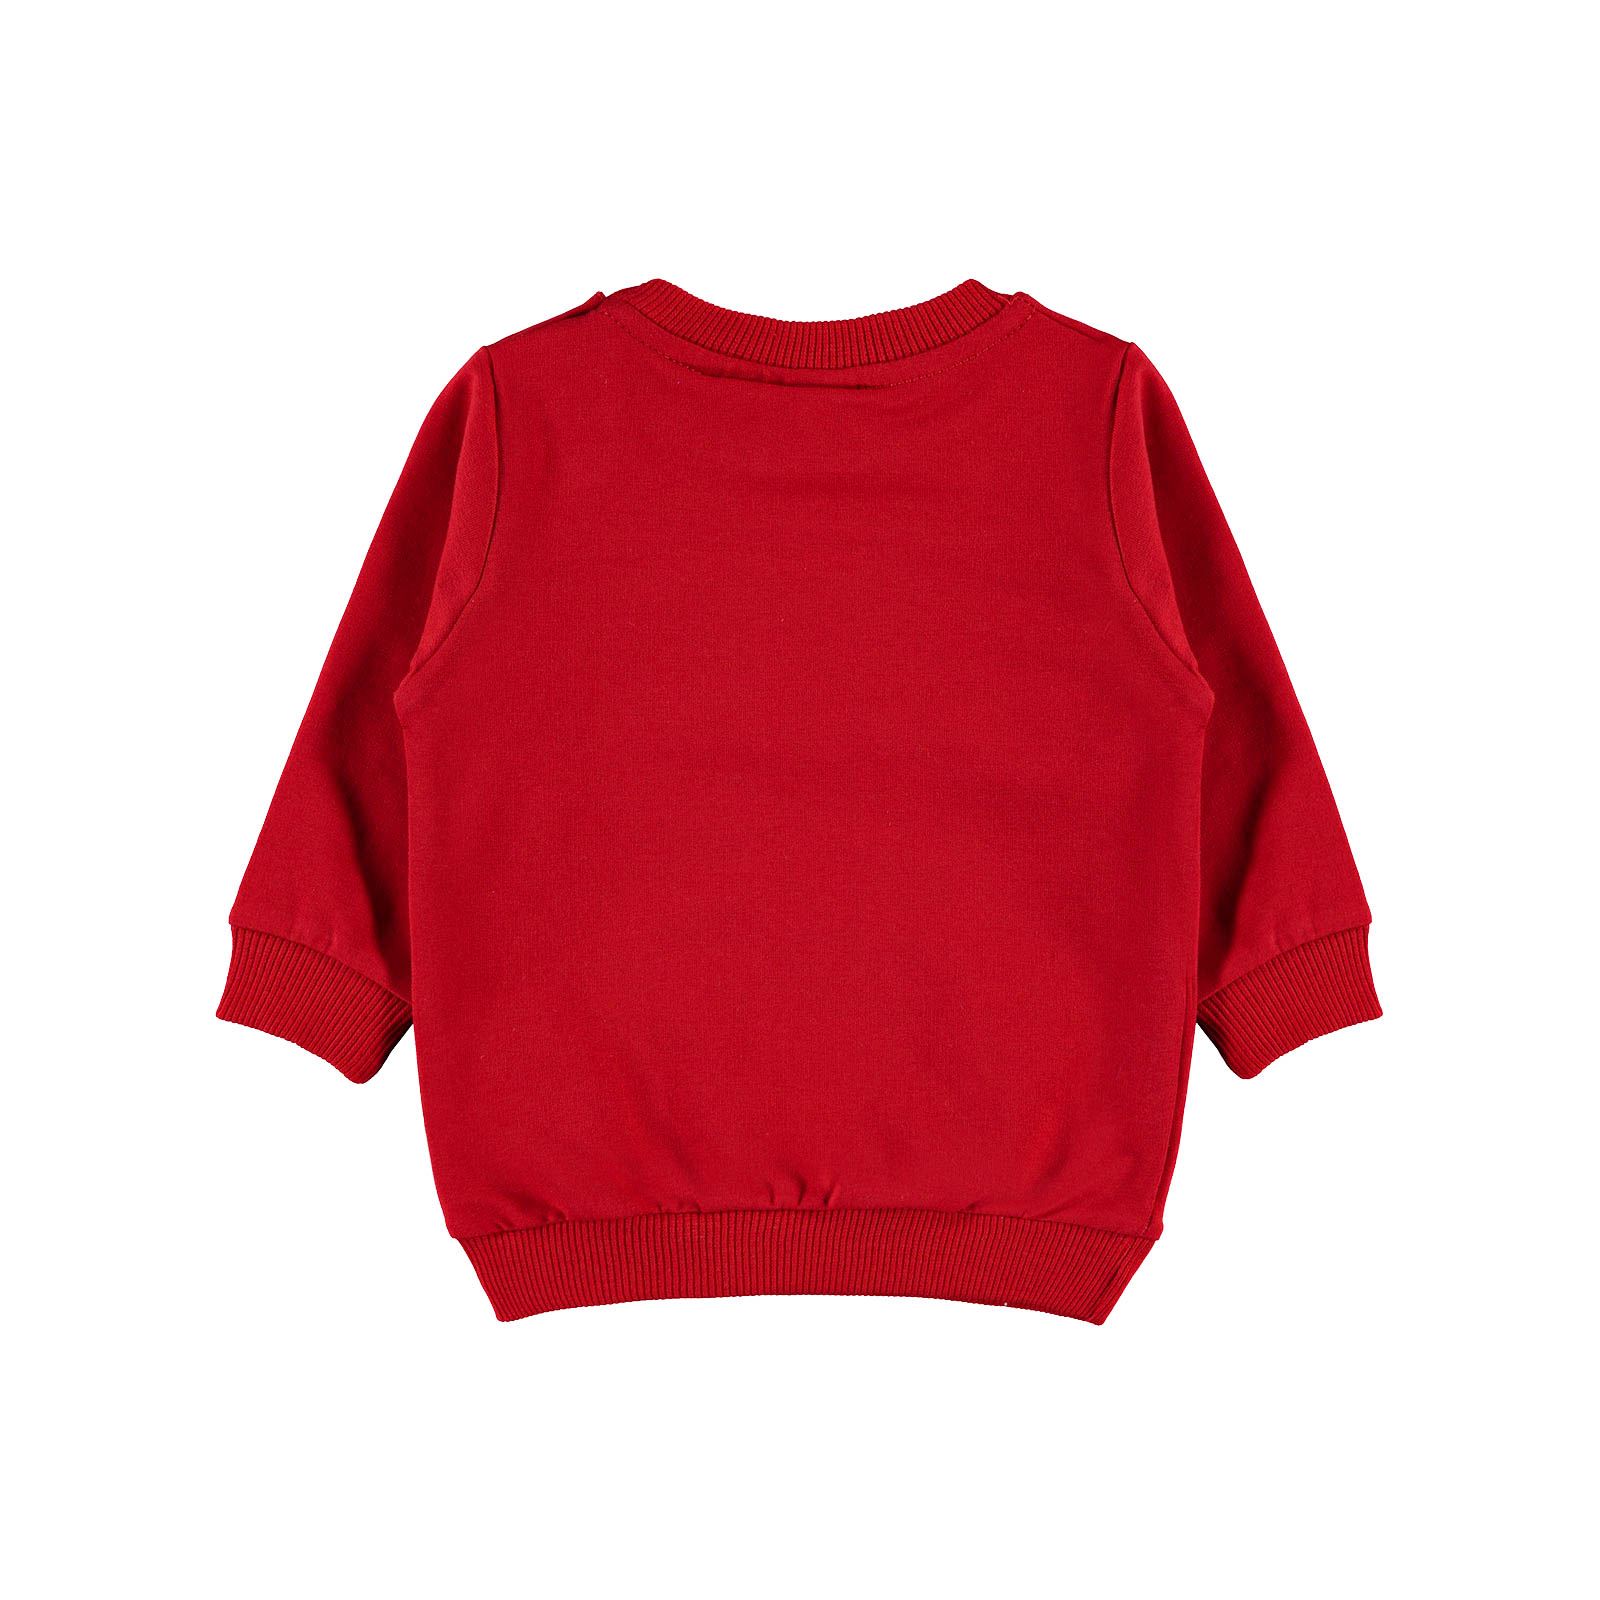 Superman Erkek Bebek Sweatshirt 6-18 Ay Kırmızı